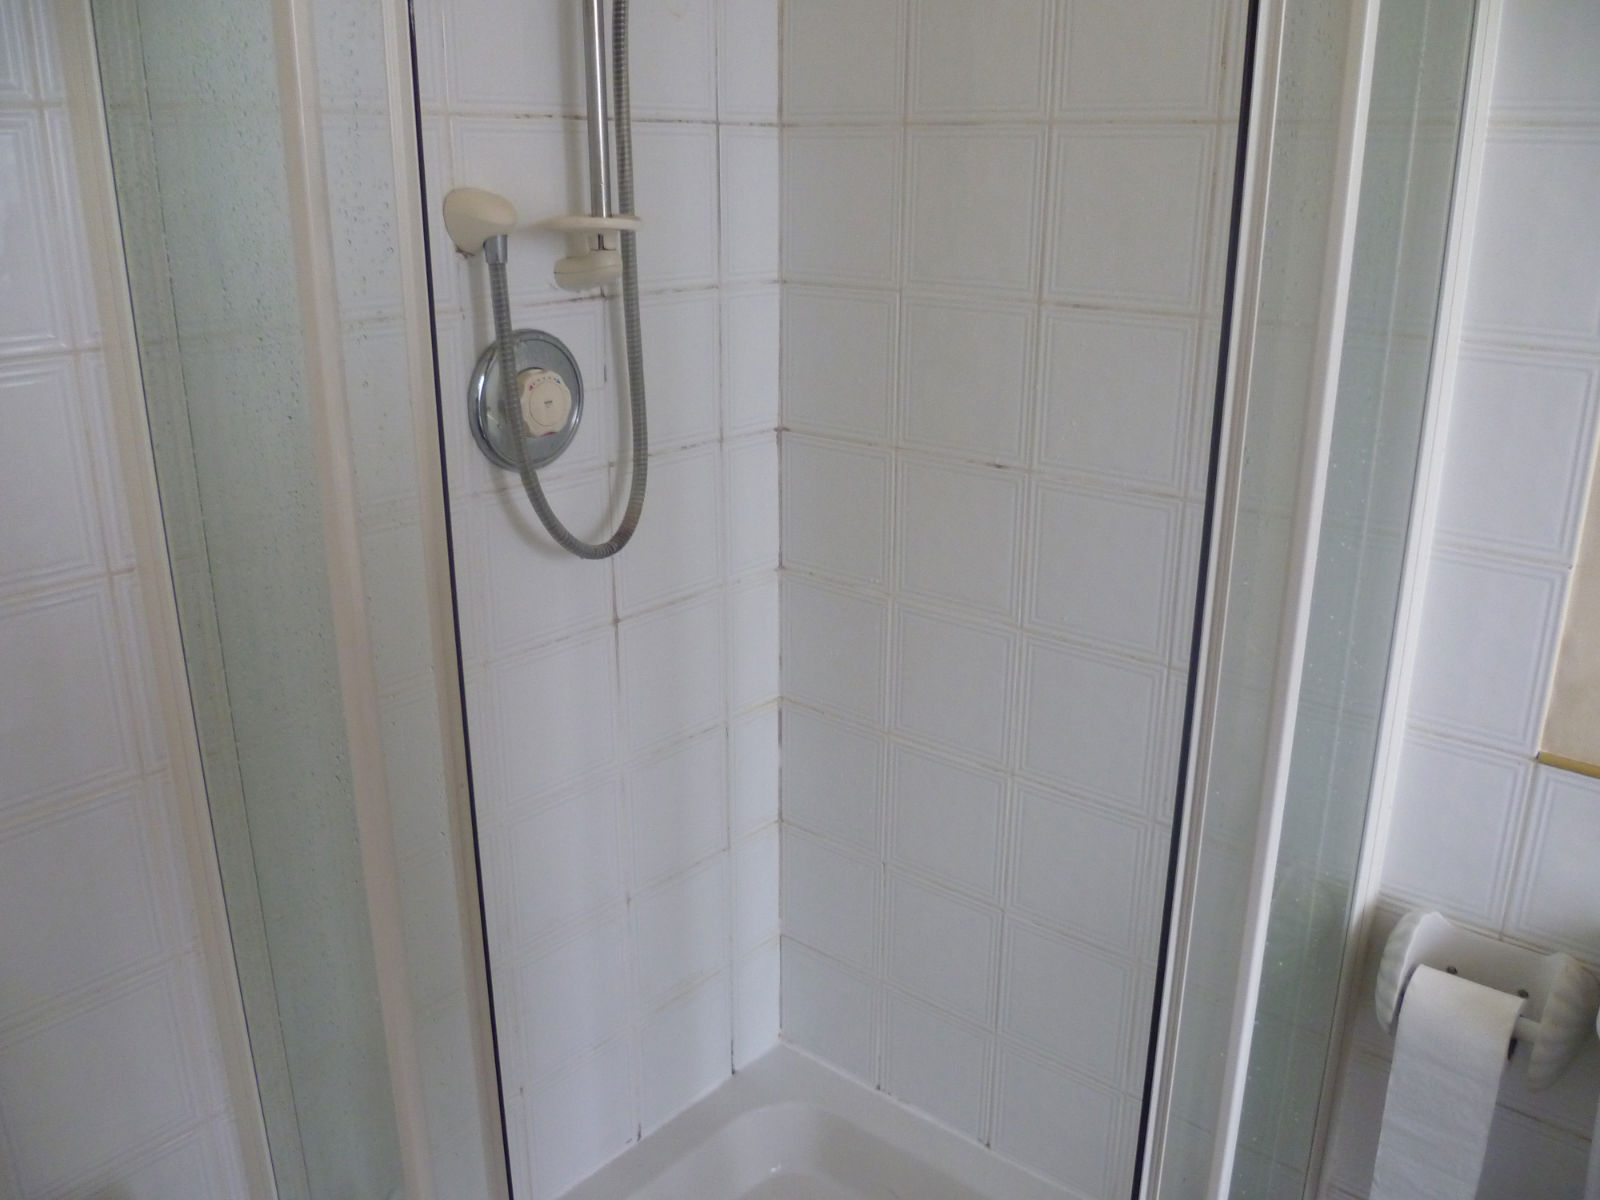 Gruby Ceramic Tiled Shower in Bishopton Before